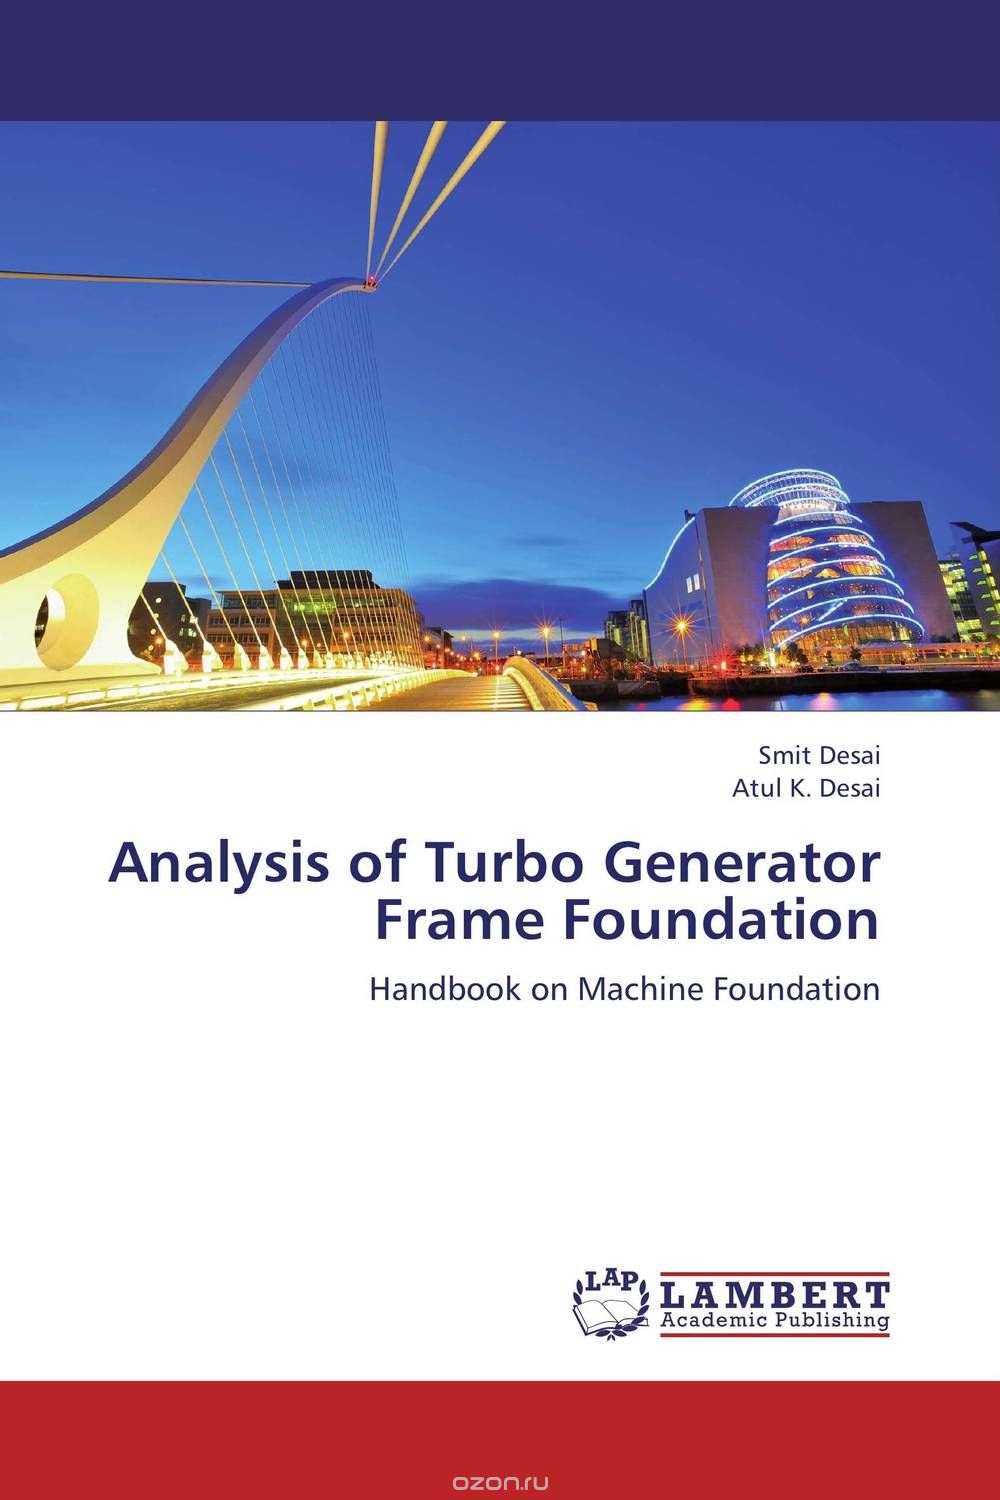 Скачать книгу "Analysis of Turbo Generator Frame Foundation"